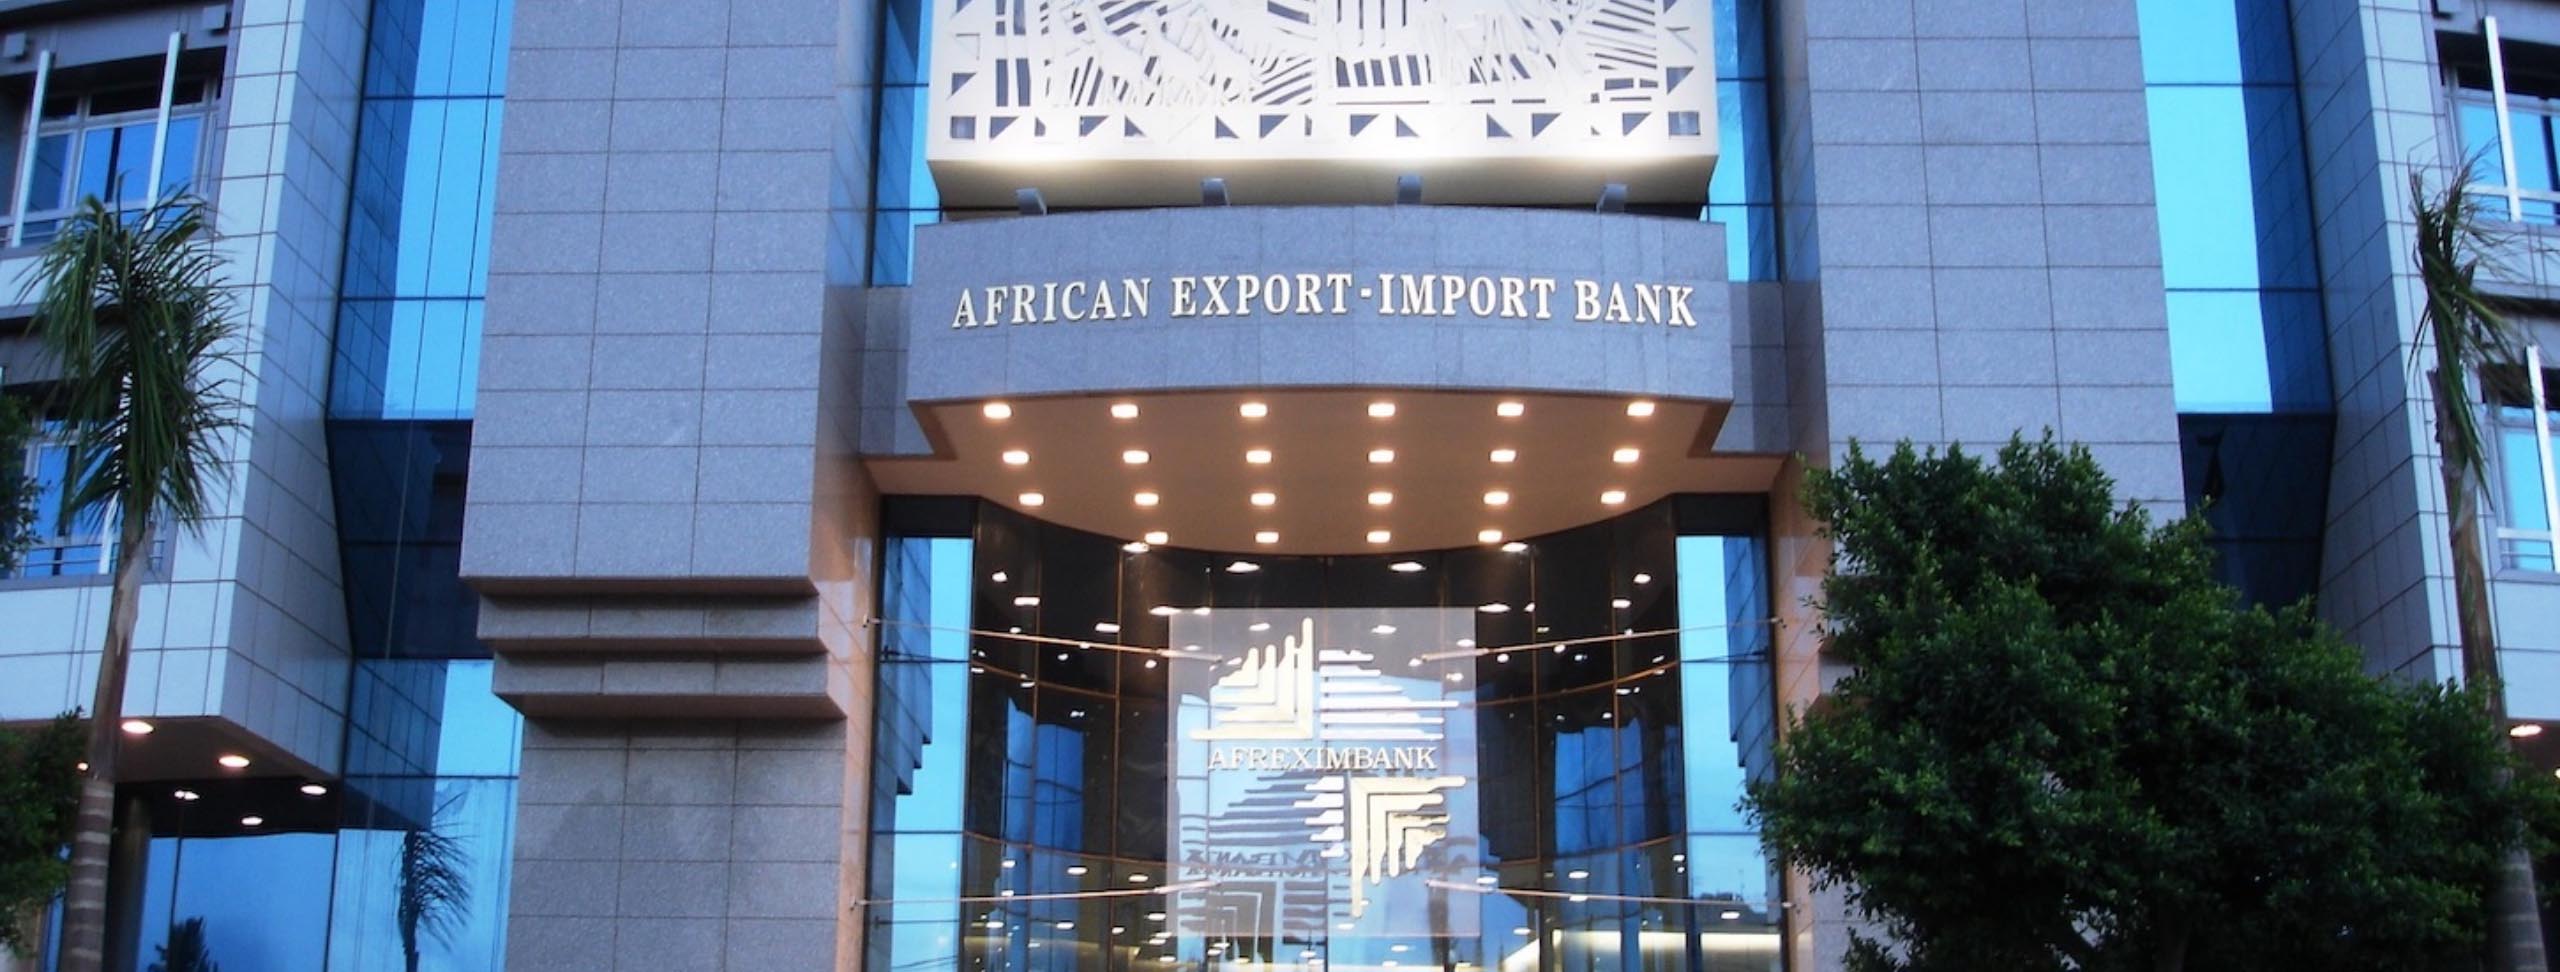 African Export-Import Bank (Afreximbank) - Azeus Convene